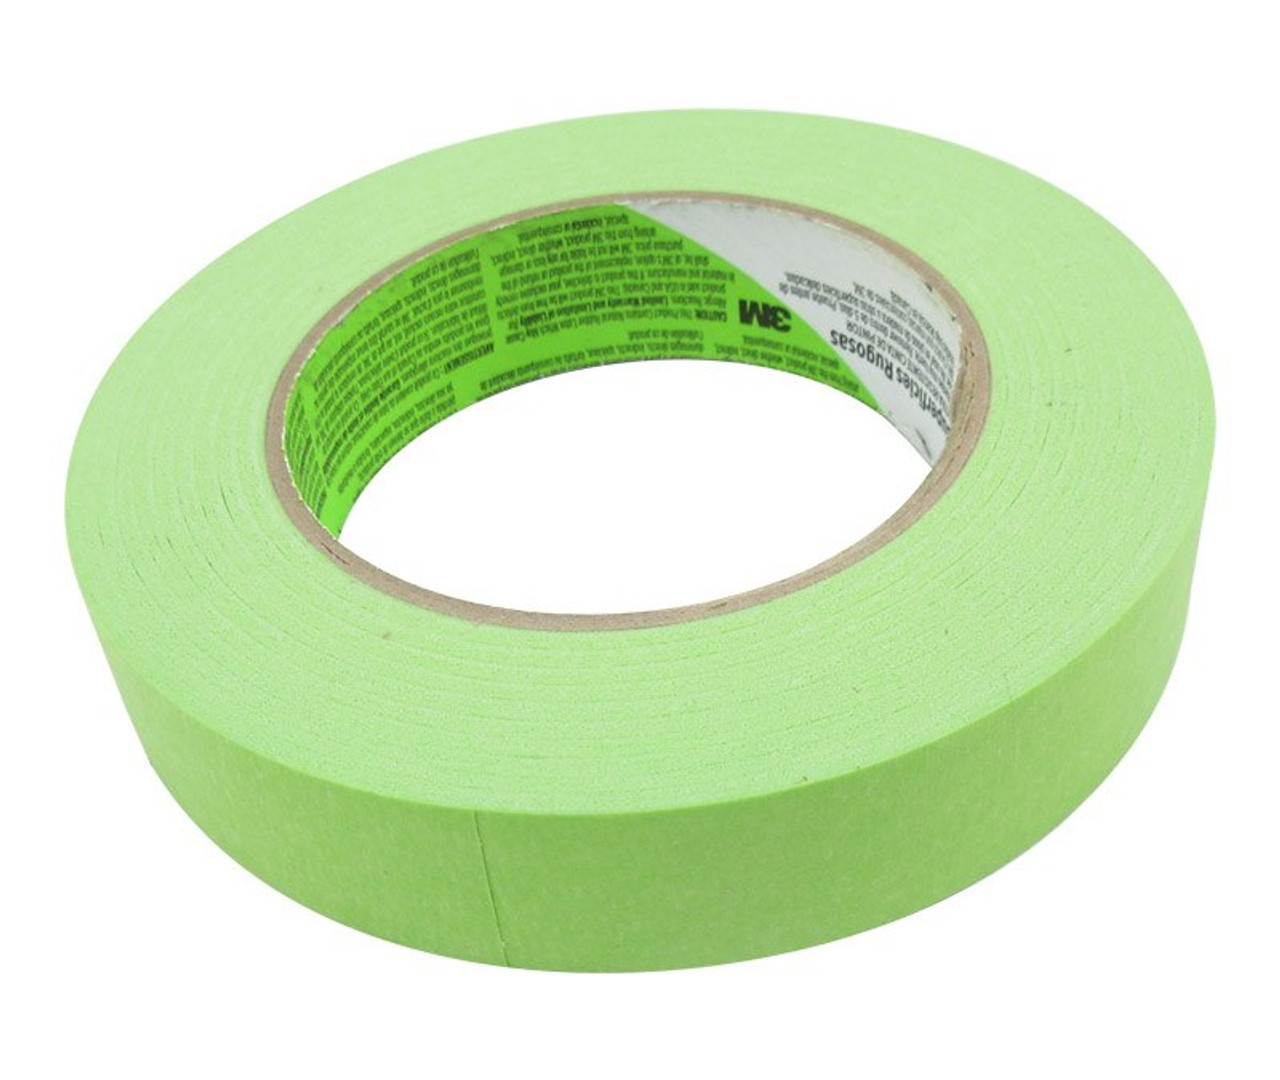 3M 021200-72066 Scotch 2060 Green Masking Tape - 24 mm x 55 m Roll at